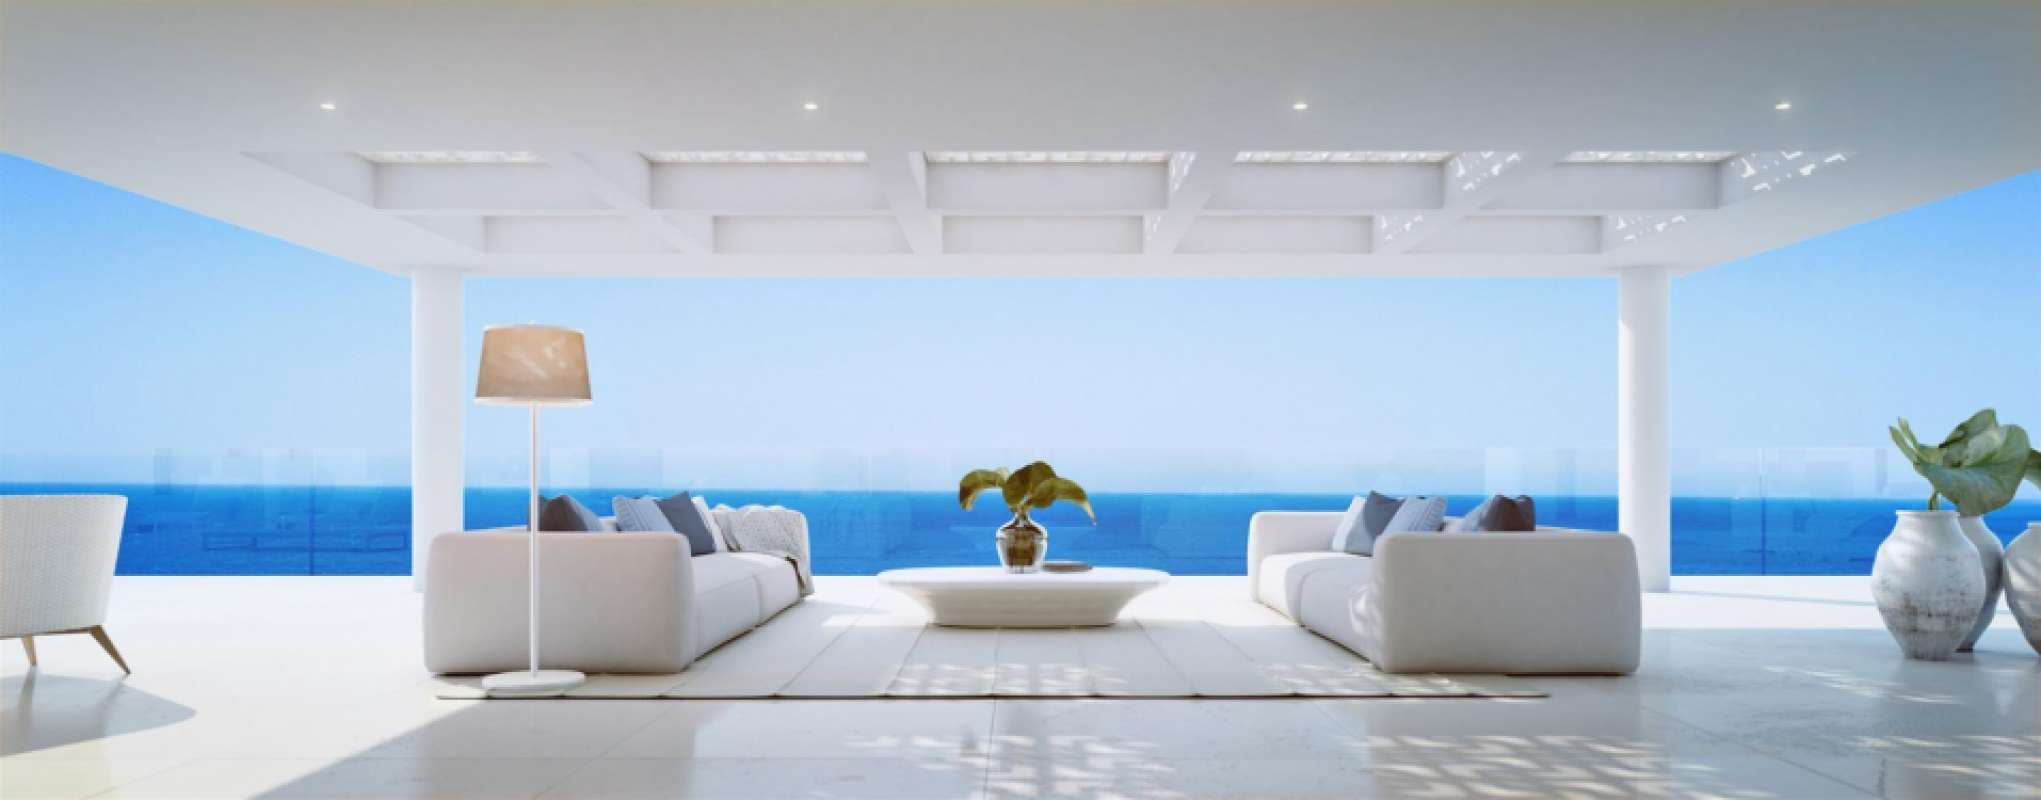 3 Bedroom Apartment For Sale Estepona Beach Frontline Lp05826 Facd46ae55a4500.jpg